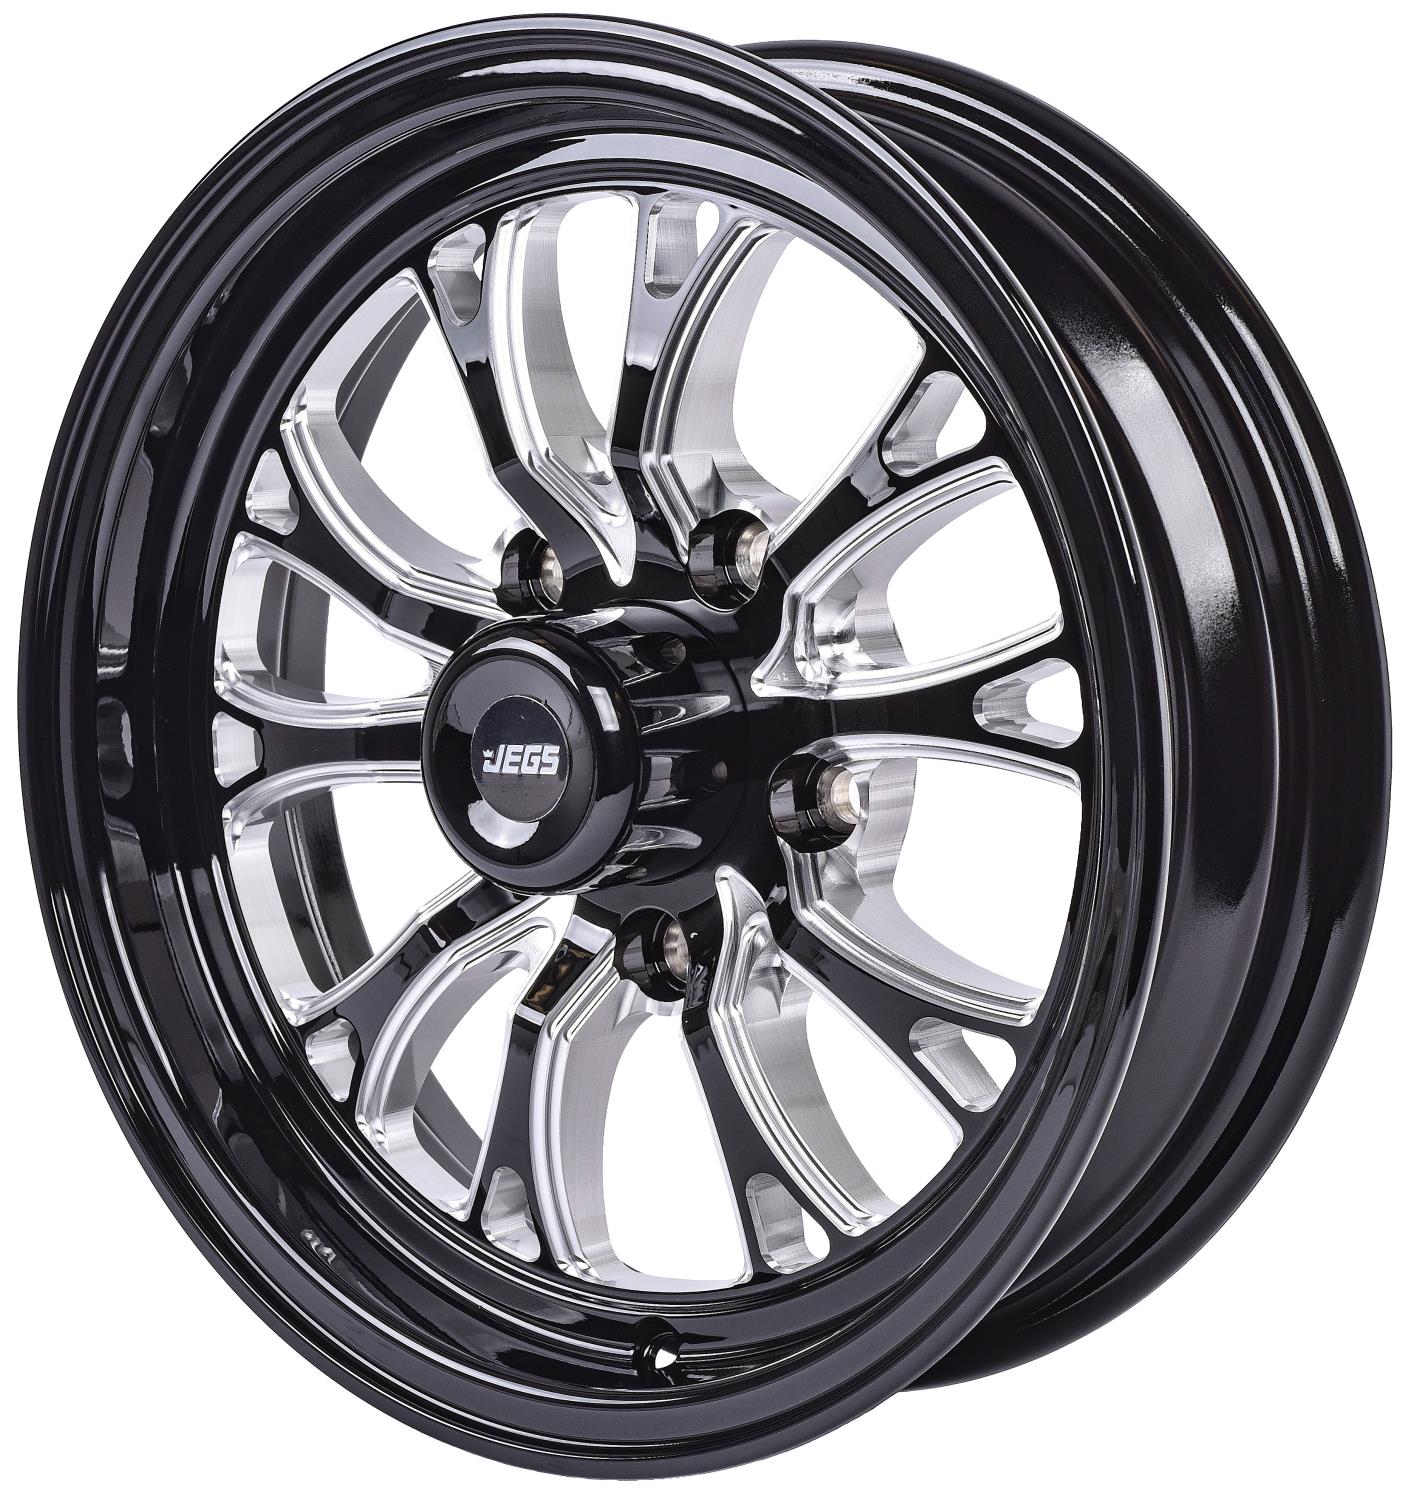 SSR Spike Wheel [Size: 15" x 4"] Gloss Black